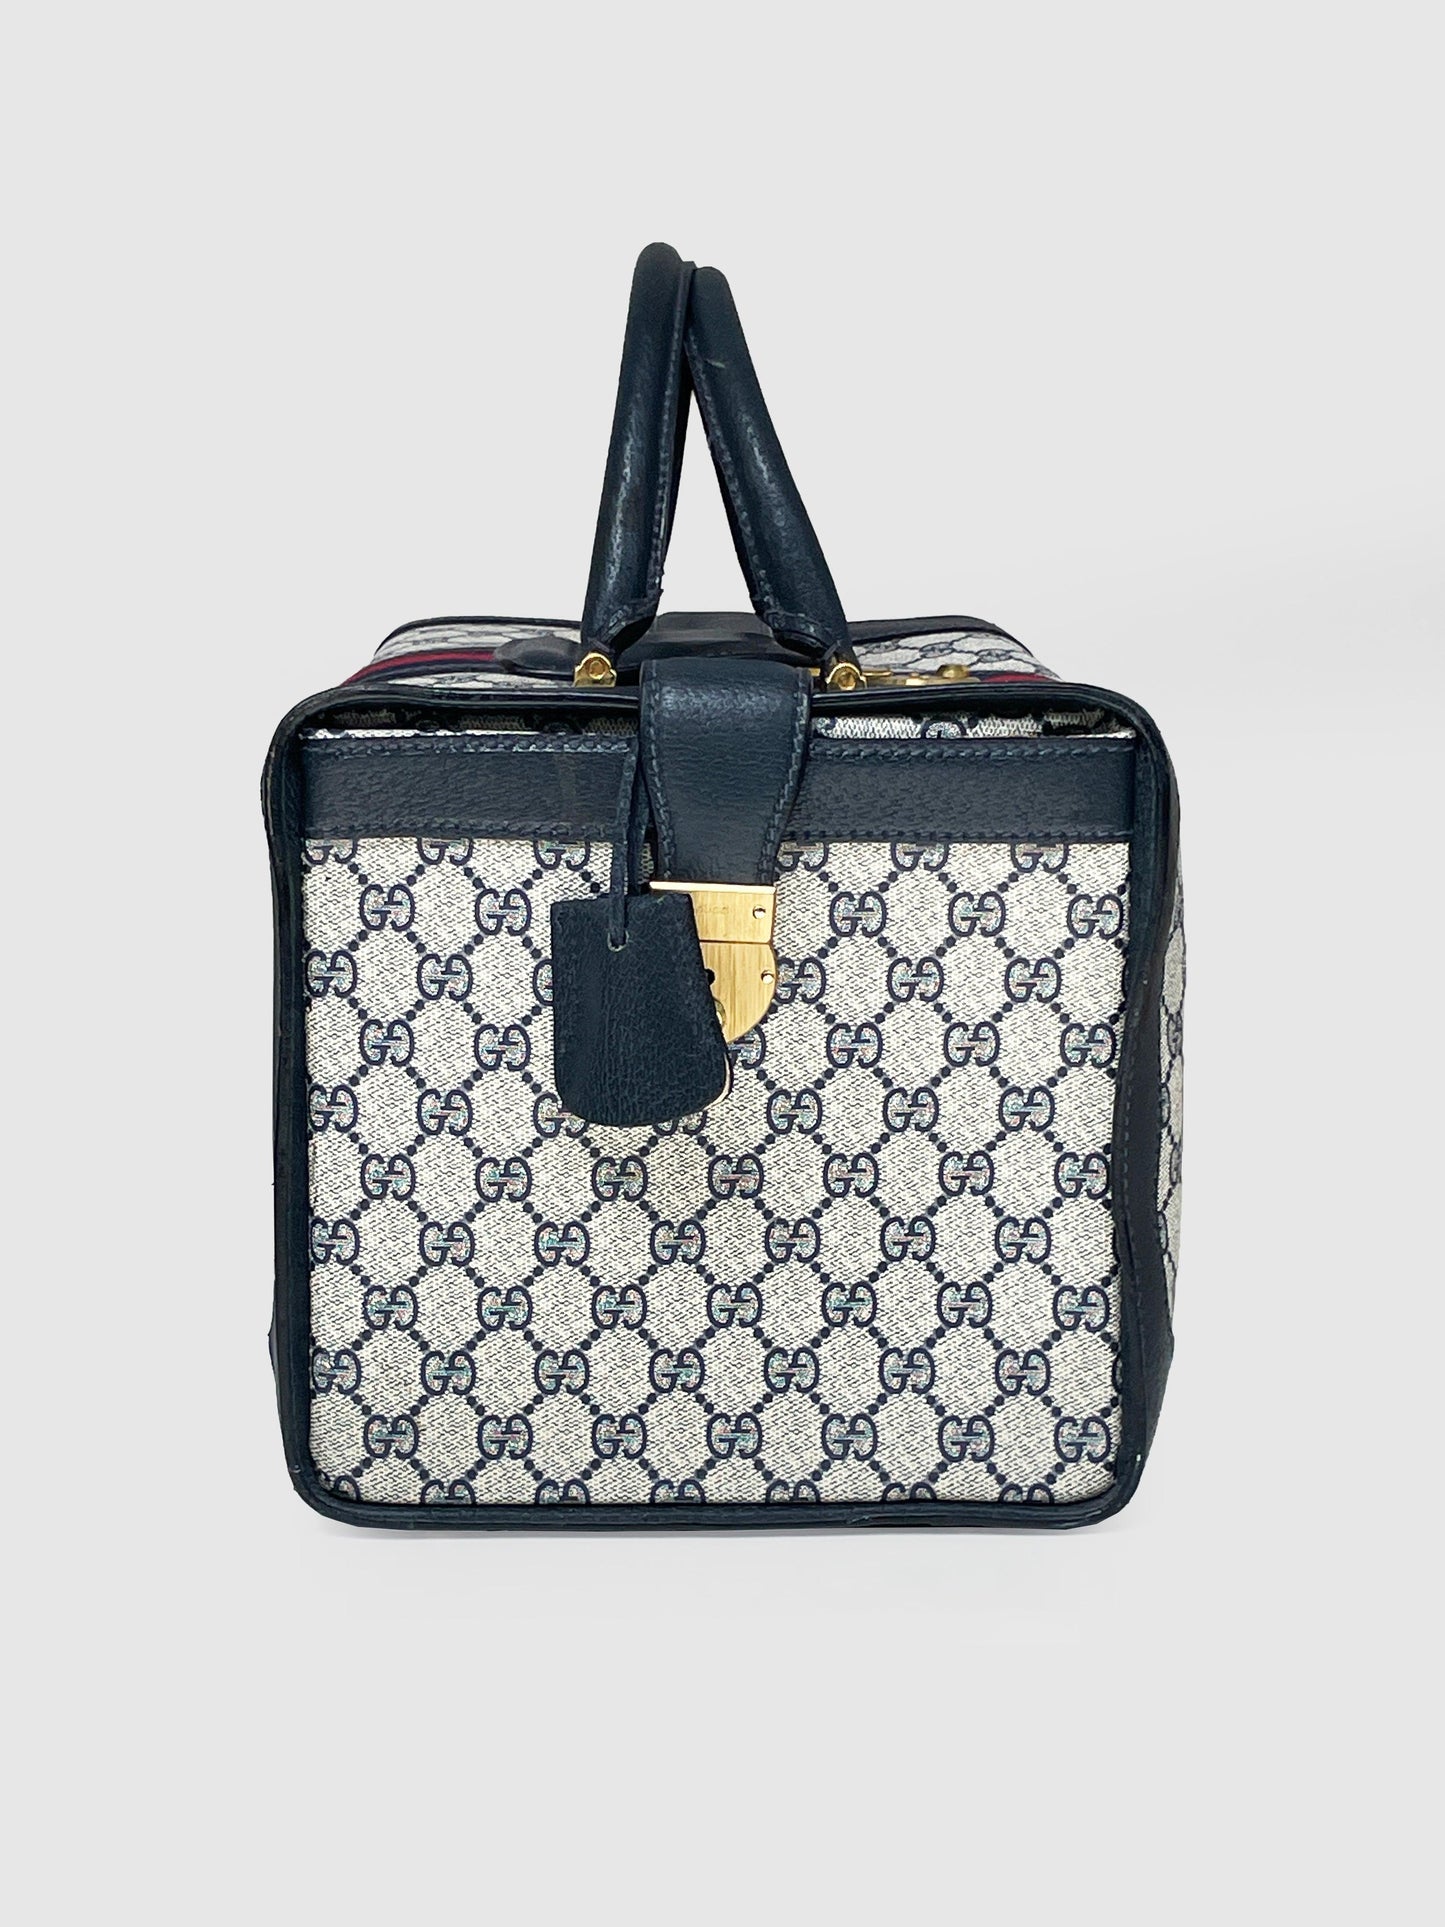 Gucci Trunk Vanity Case Travel Bag - Second Nature Boutique